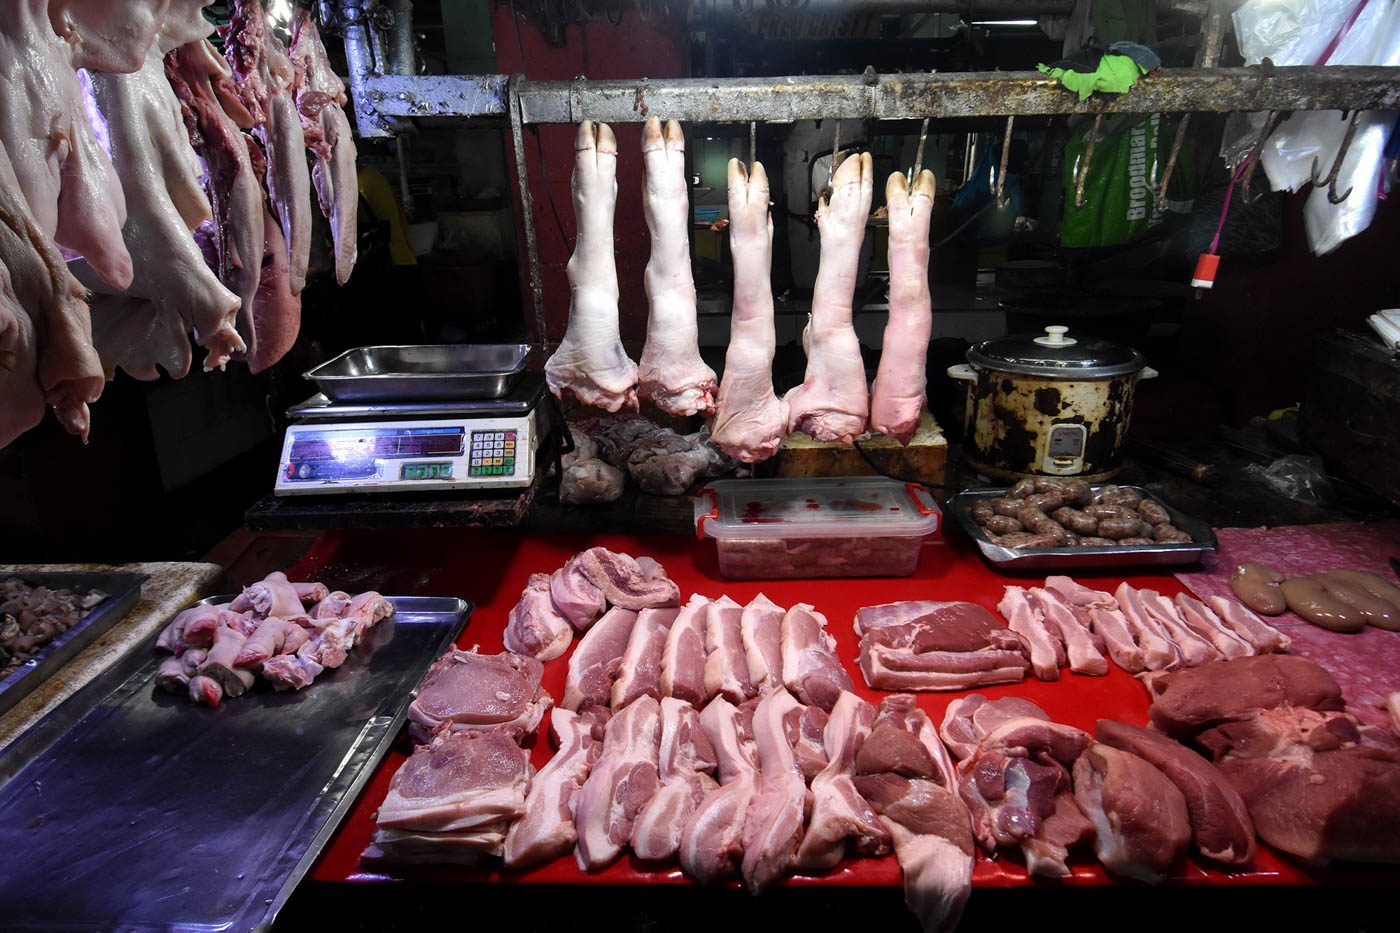 Pork from Eastern Visayas not allowed in Cebu